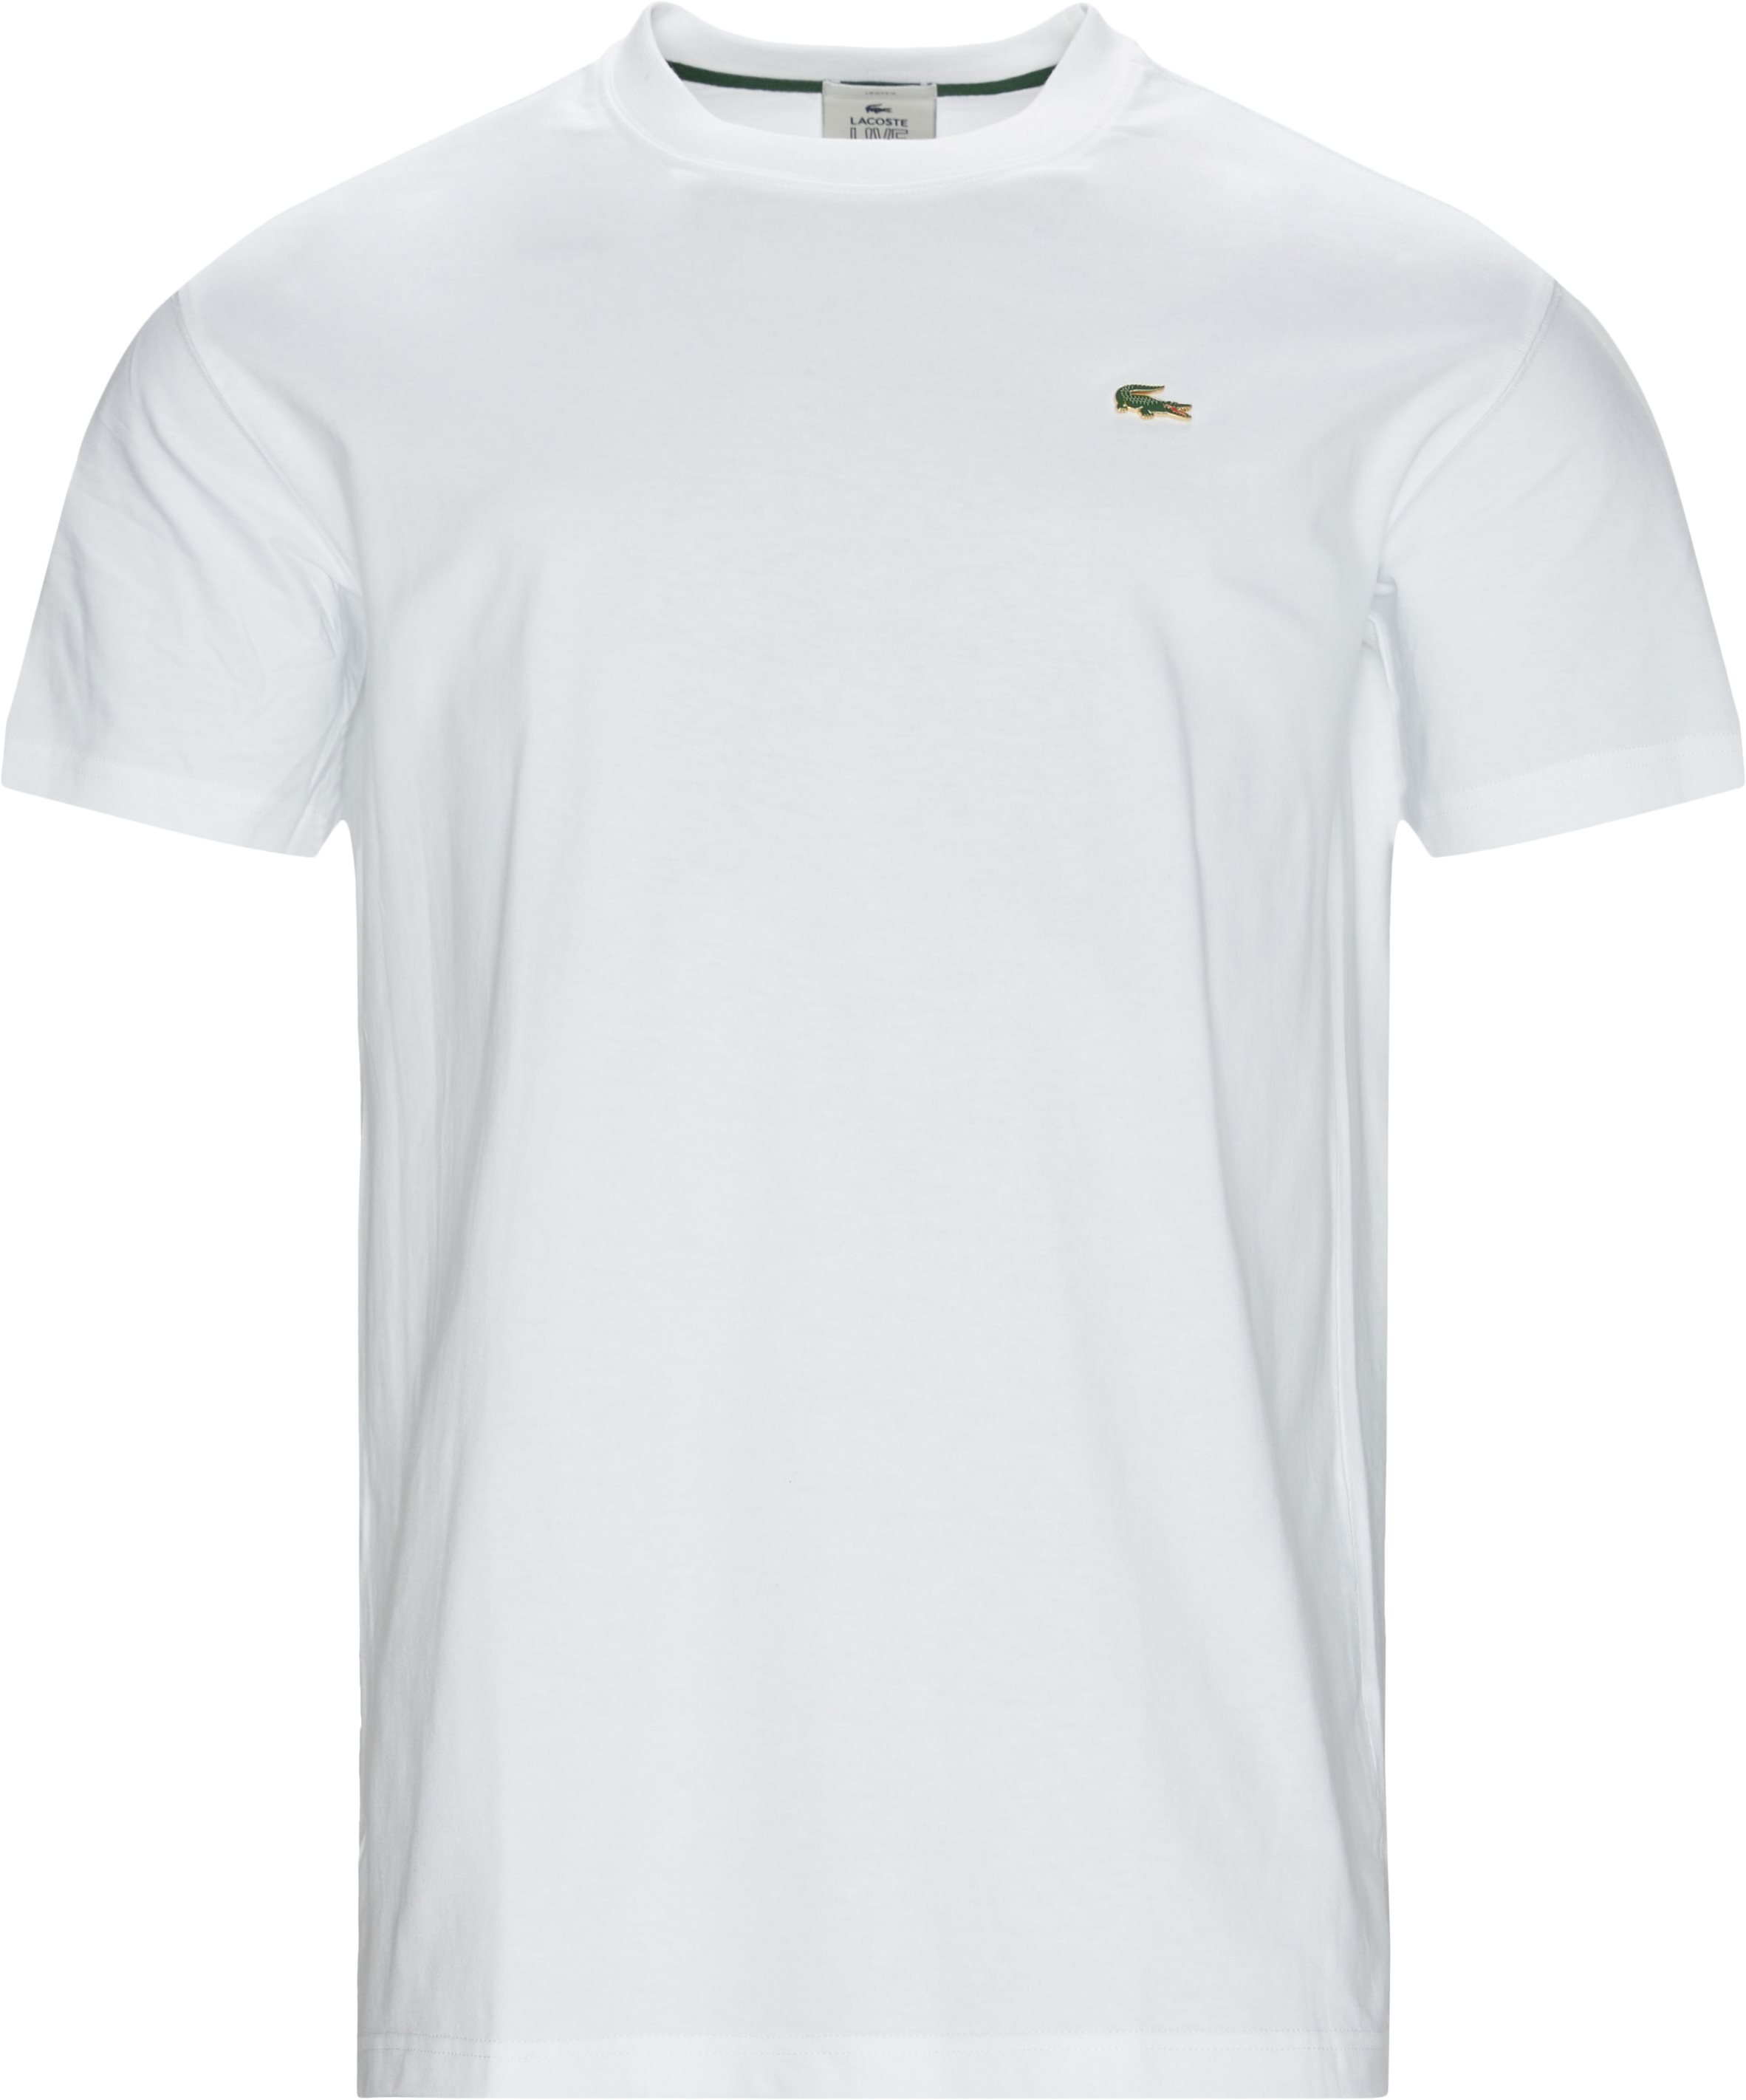 Th9162 Tee - T-shirts - Regular fit - Hvid